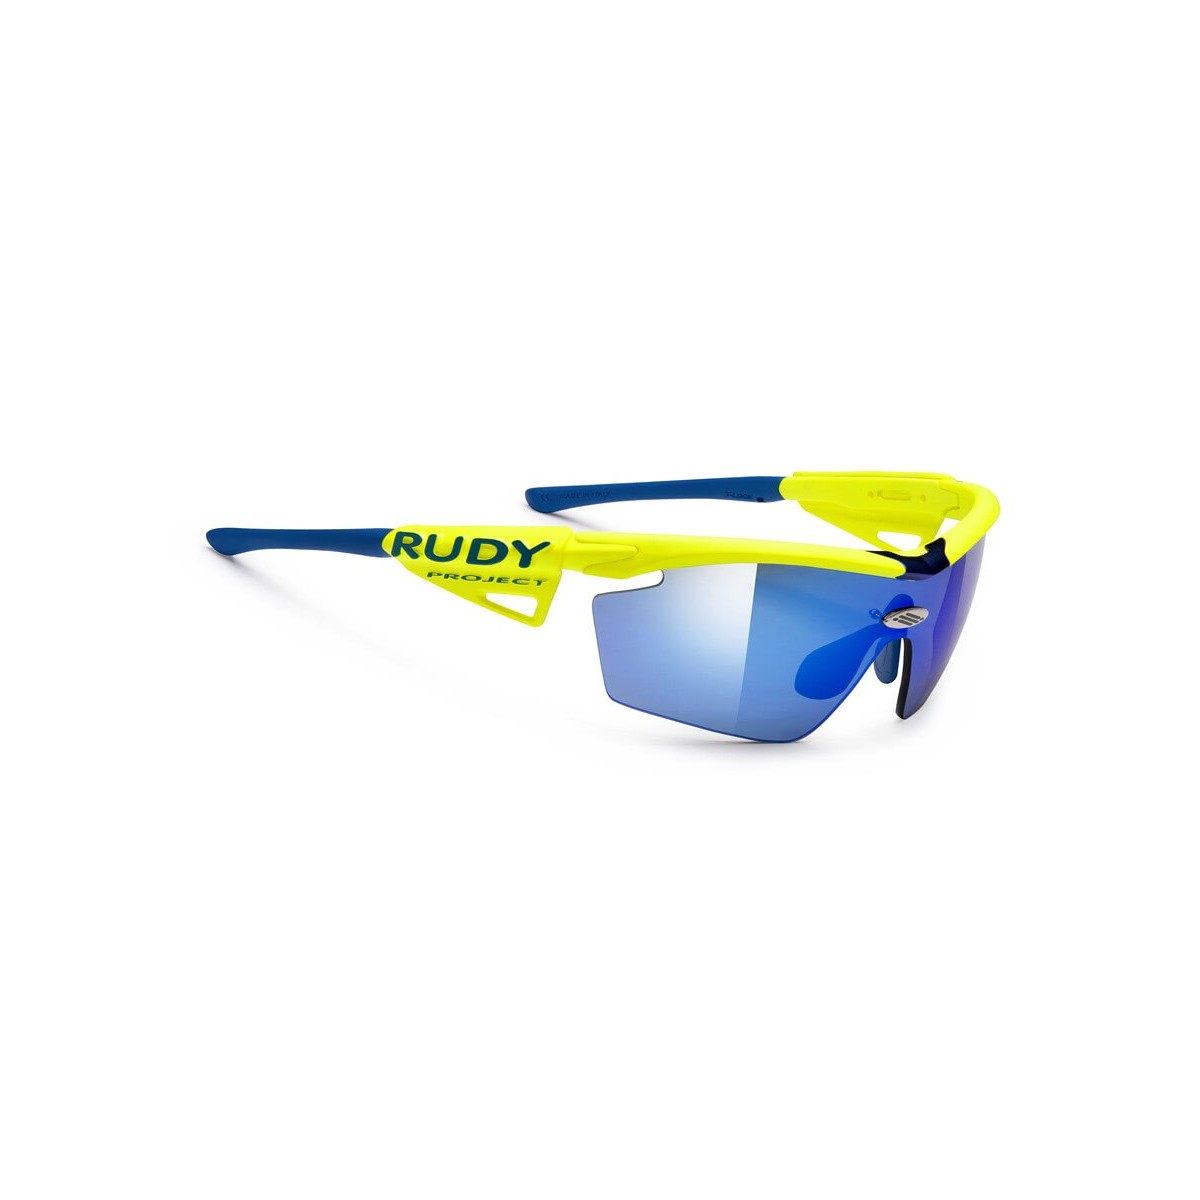 Fluo RPO günstig Kaufen-Genetyk Racing Pro Gelb Fluo RPO Multilaser Blau Rudy Projektbrille. Genetyk Racing Pro Gelb Fluo RPO Multilaser Blau Rudy Projektbrille . 